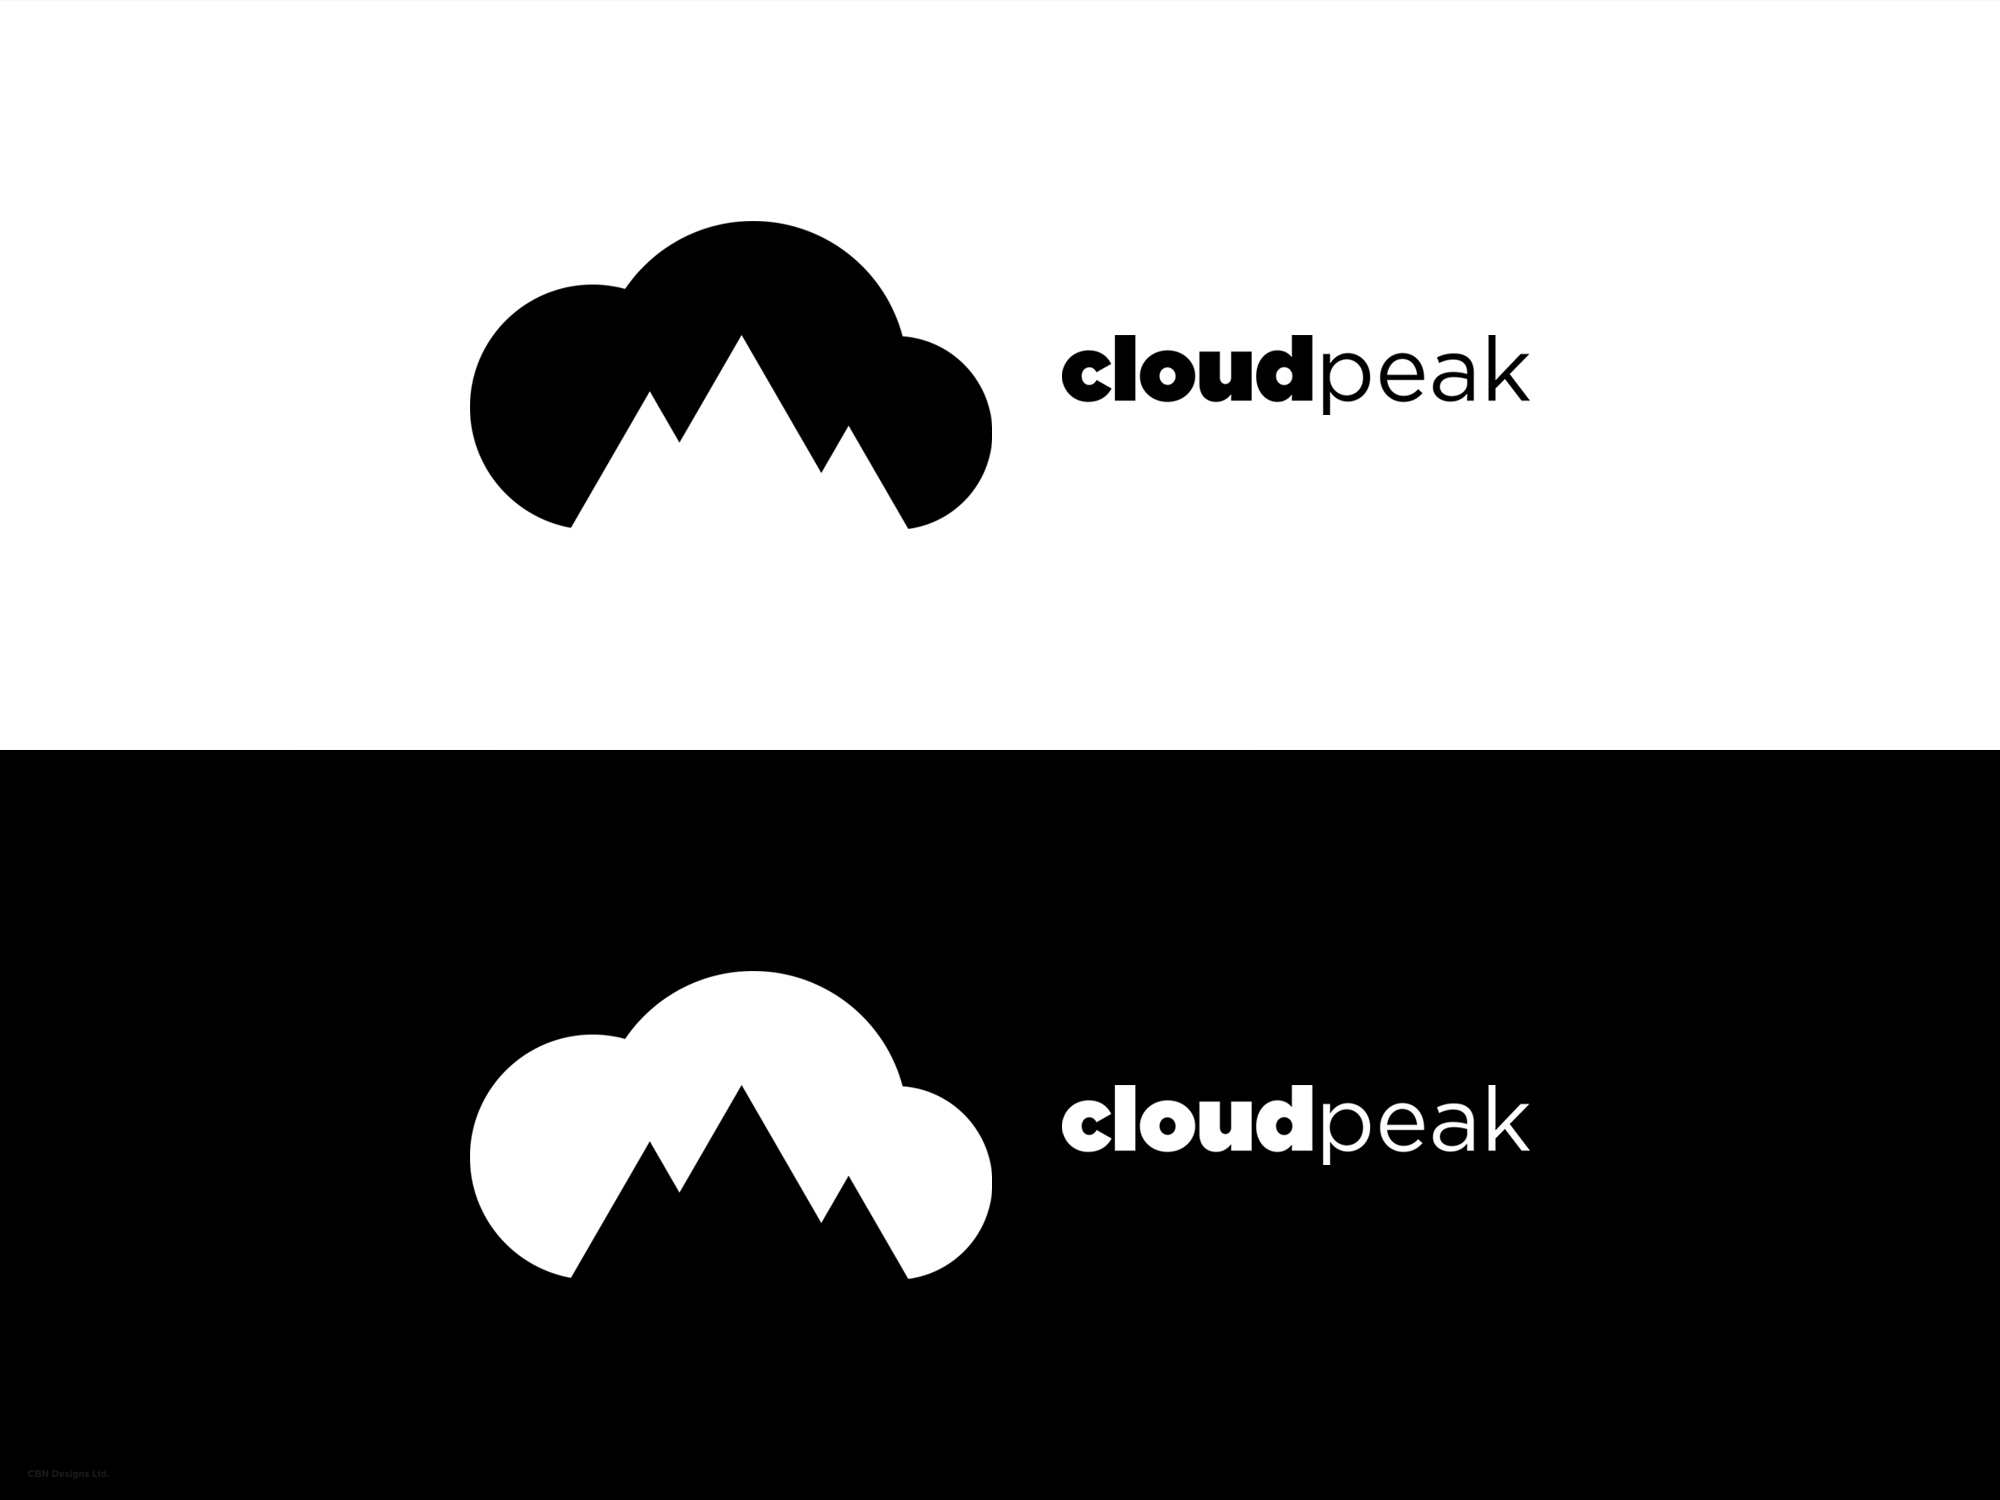 194-cbn-logo---cloud-peak-black-and-white.jpg